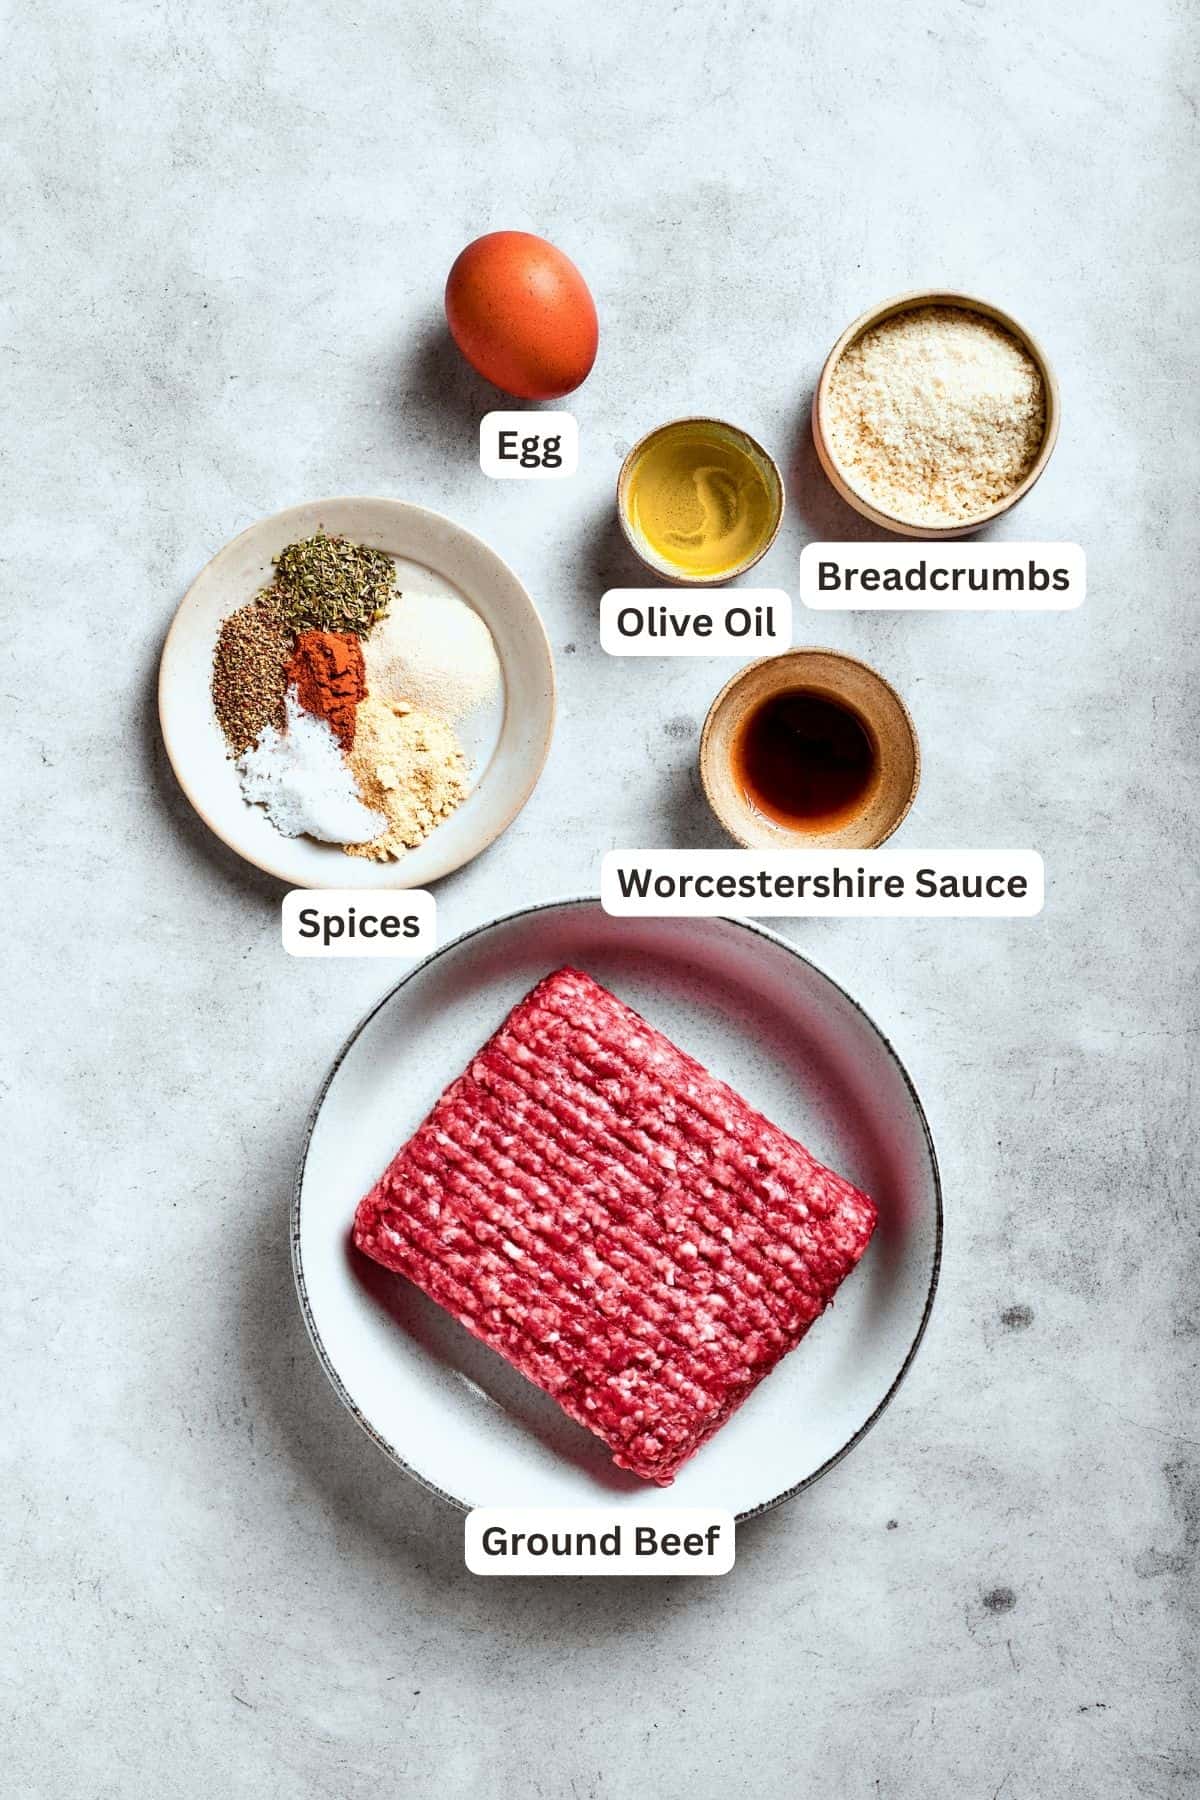 Ingredients for chopped steak are shown: ground beef, egg, seasonings, salt and pepper, olive oil, breadcrumbs.